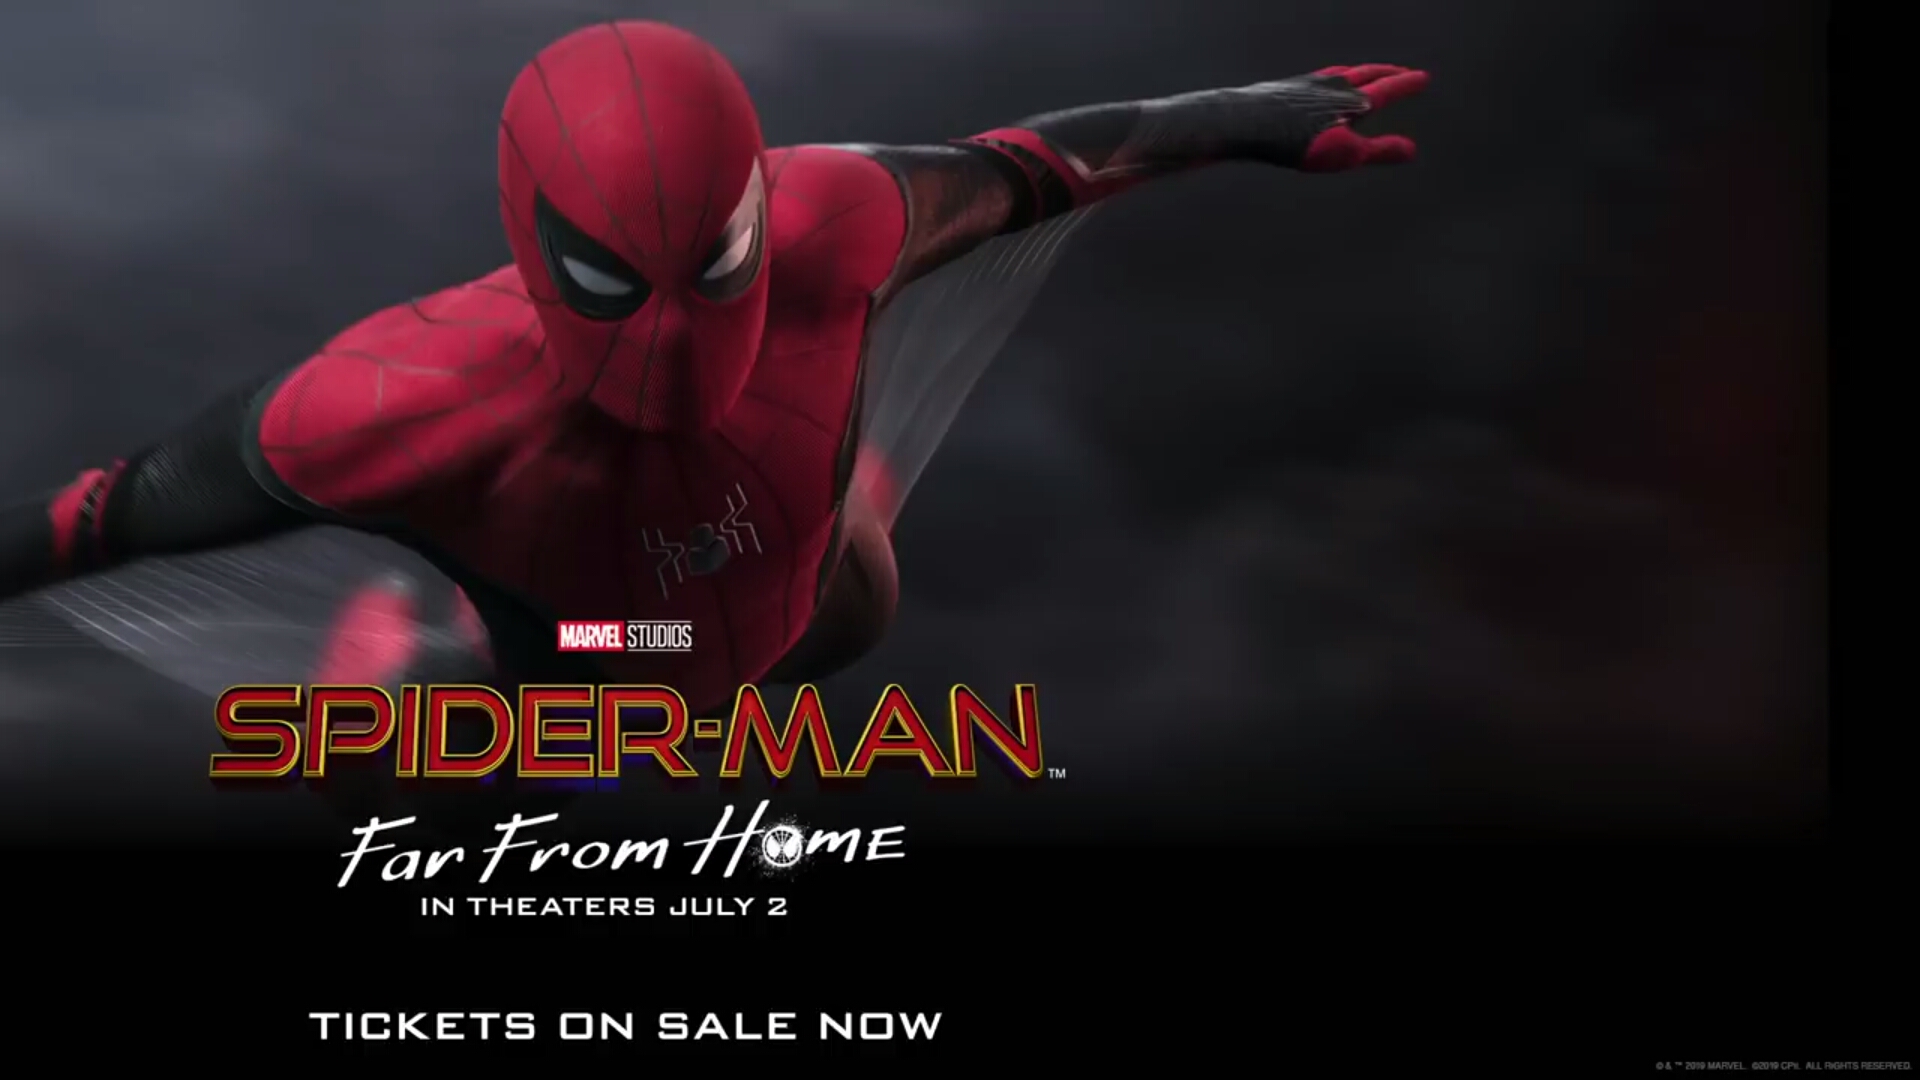 Spiderman Far From Home trailer breakdown